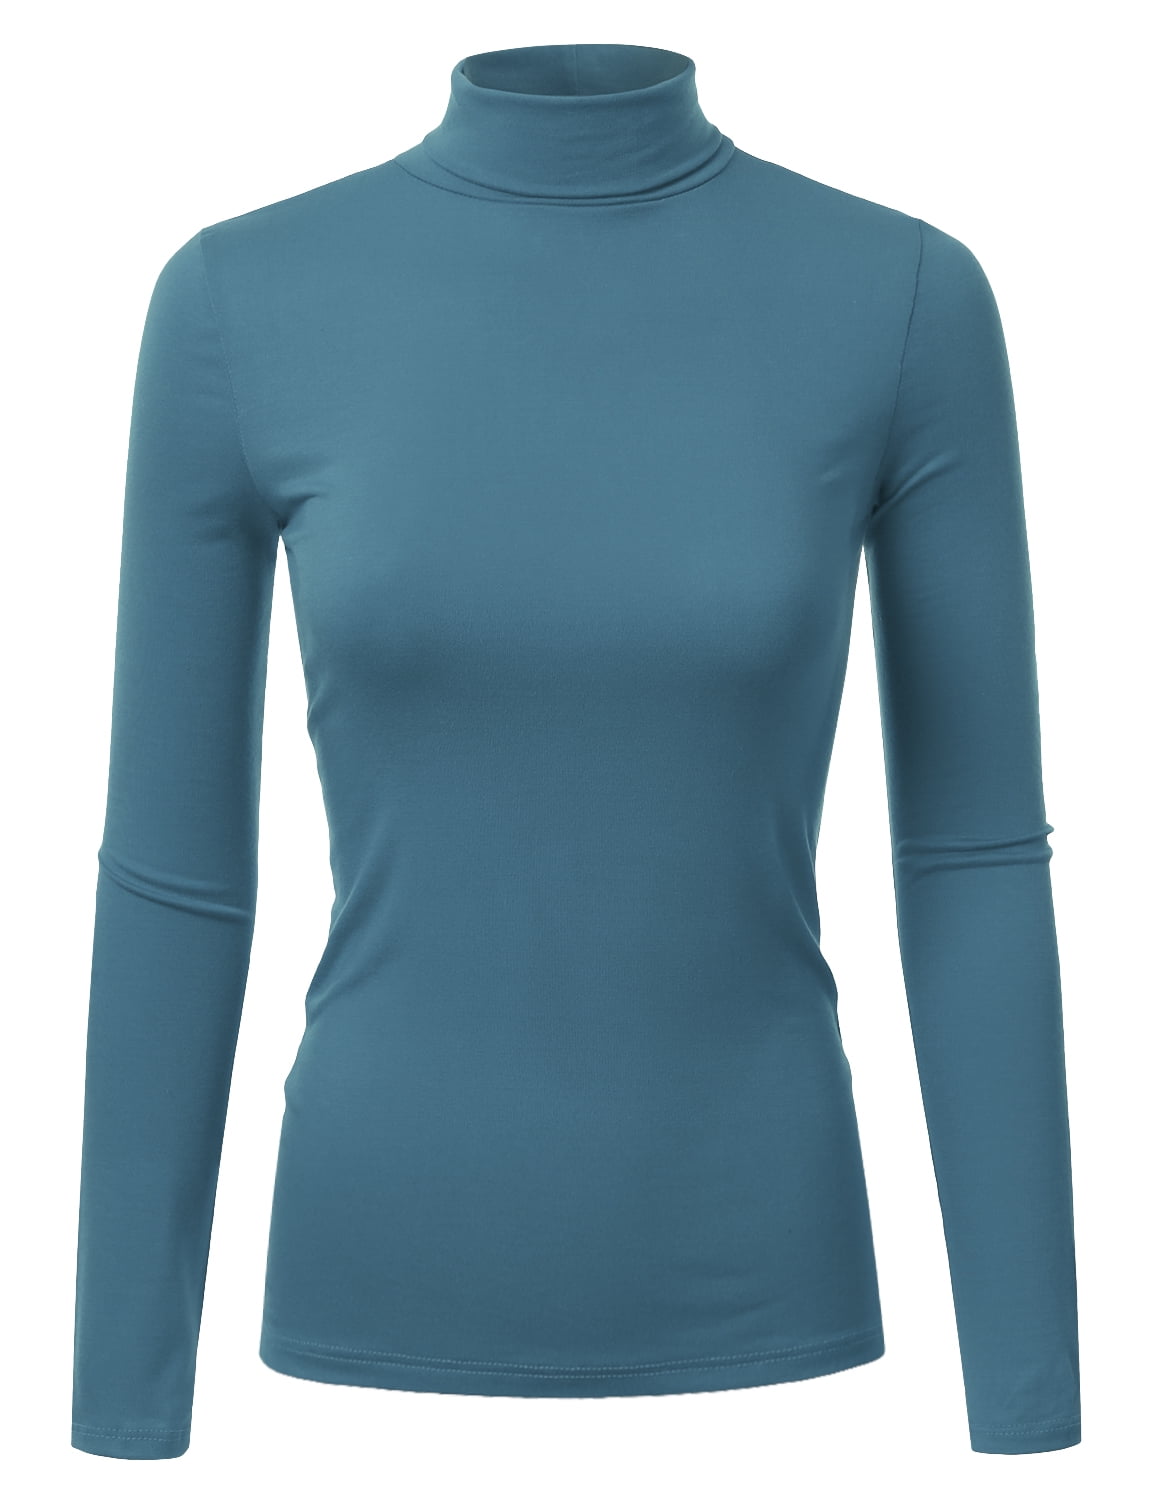 Doublju Women's Long Sleeve Turtleneck Lightweight Pullover Top Sweater ...